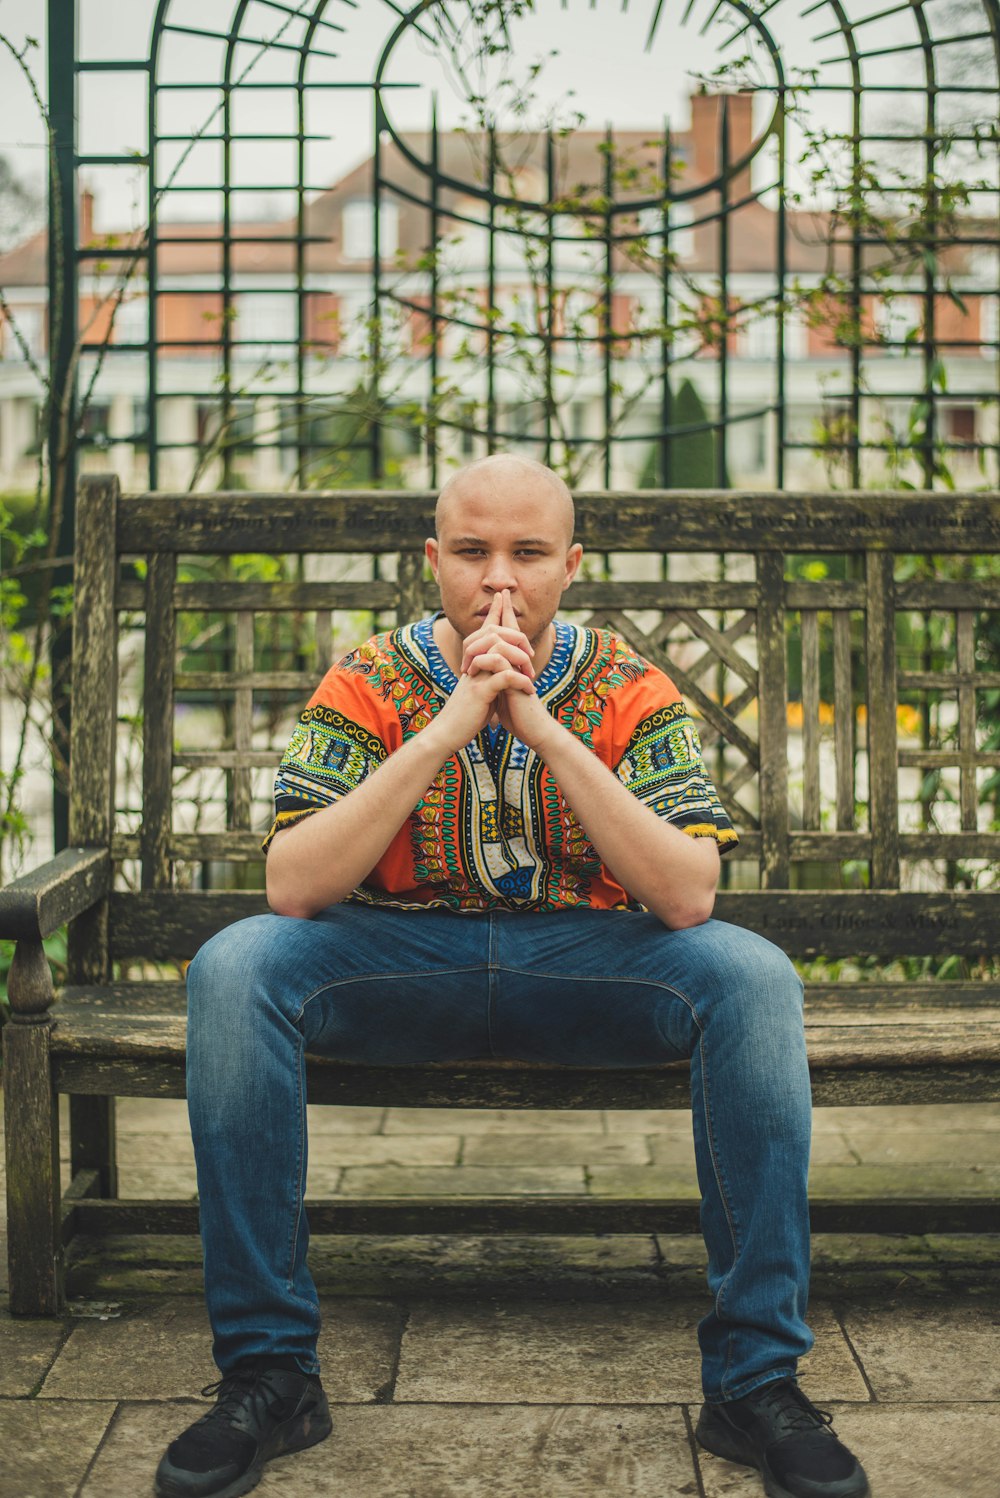 man wearing multicolored tribal shirt sitting on bench